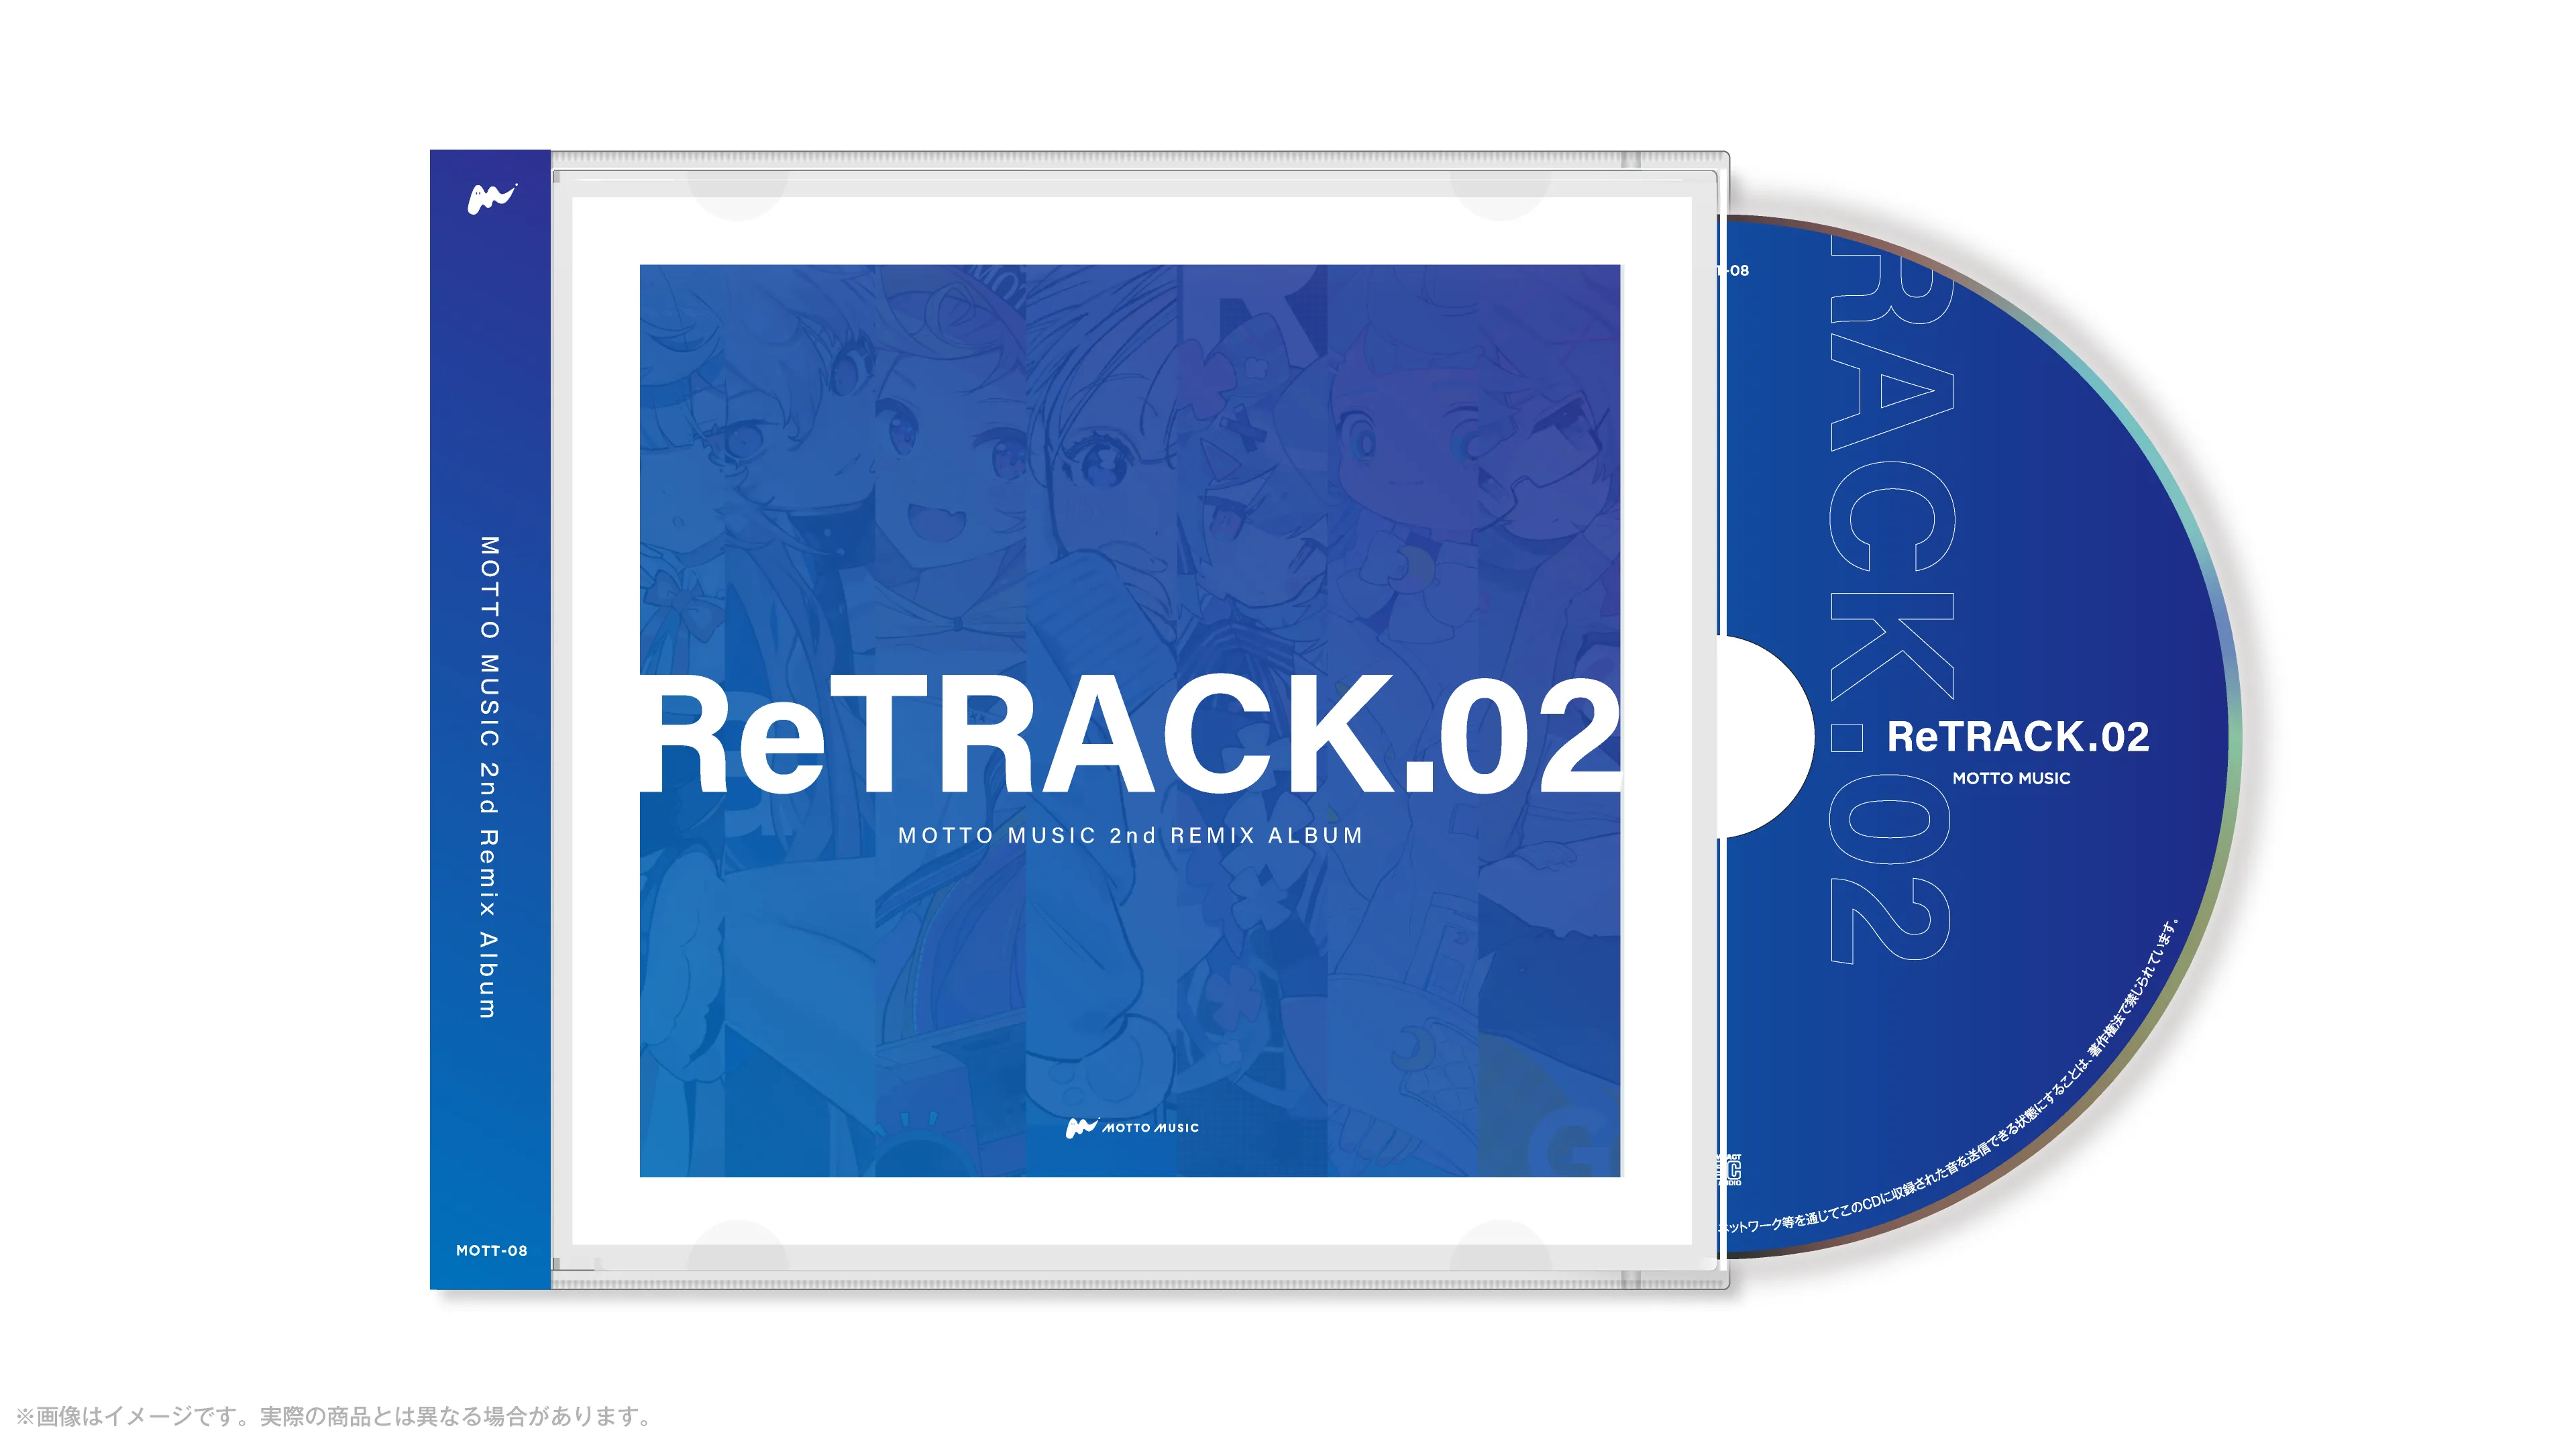 2nd Rimix AlbumwRE TRACK.02xrWA